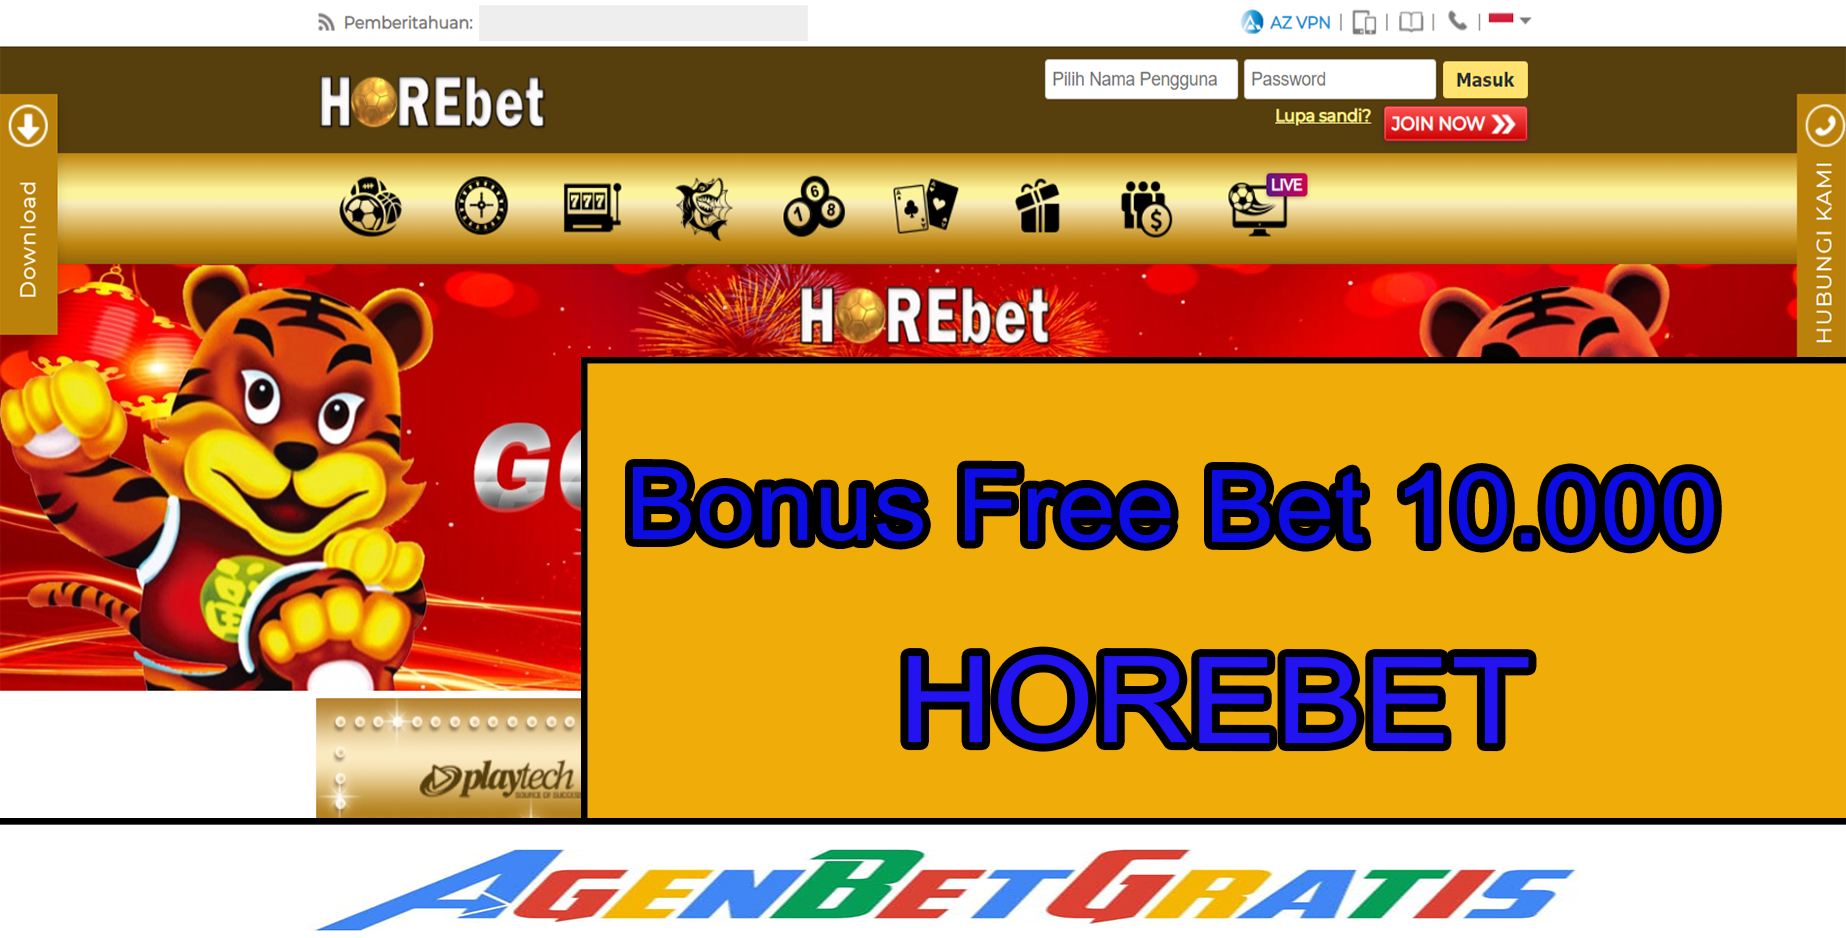 HOREBET - Bonus FreeBet 10.000